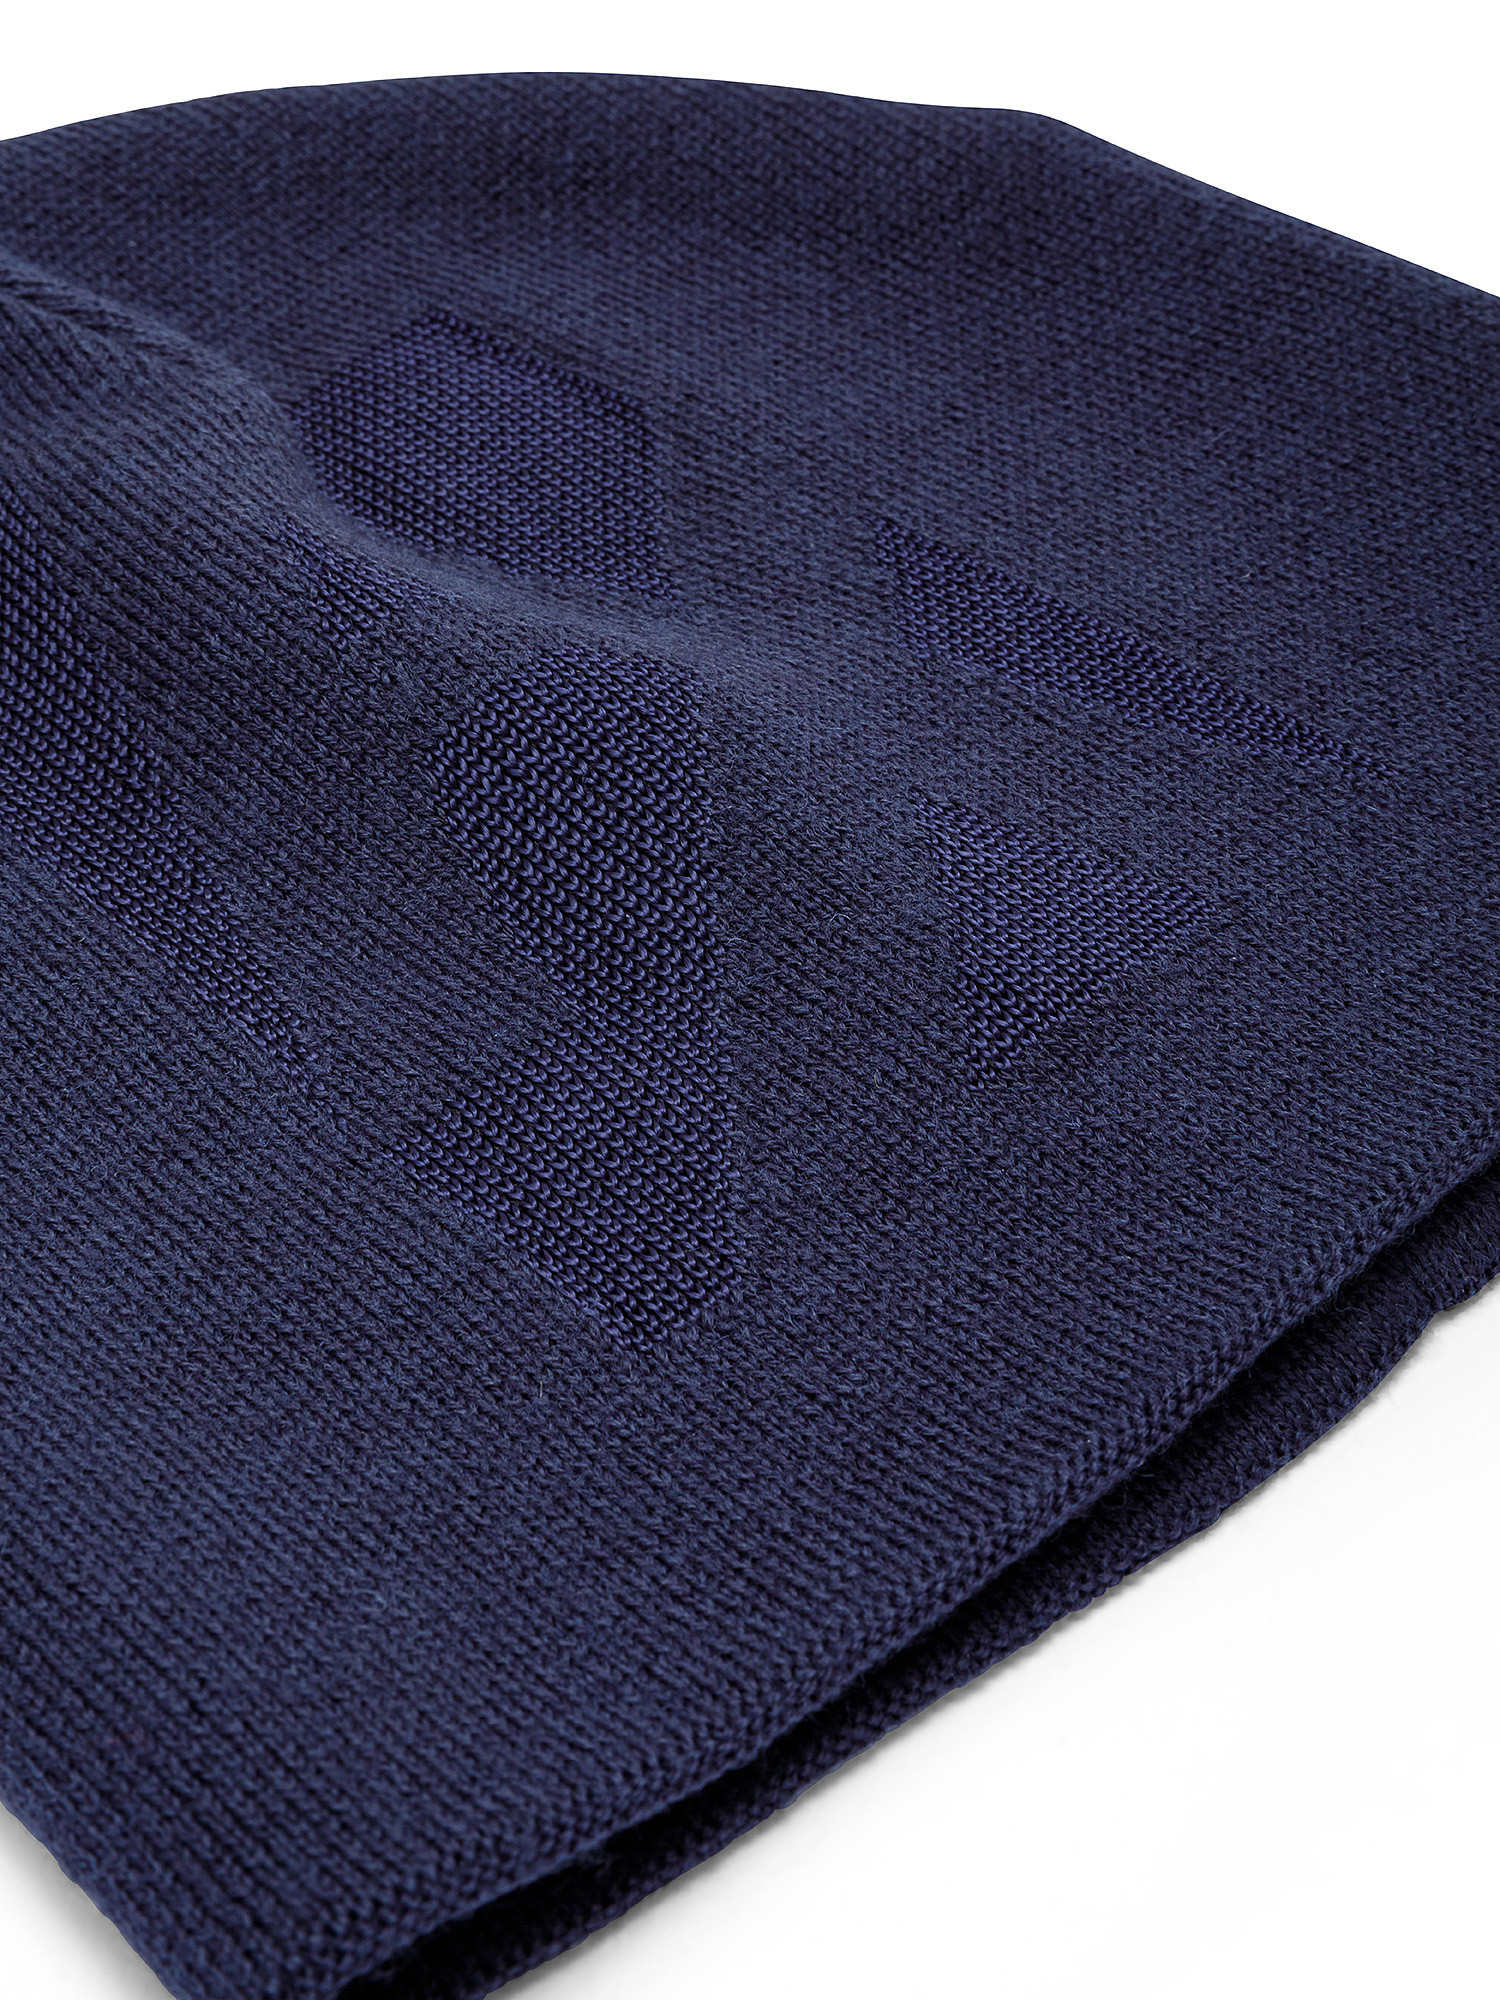 Armani Exchange - Cappello Beanie in misto lana con logo, Blu scuro, large image number 1